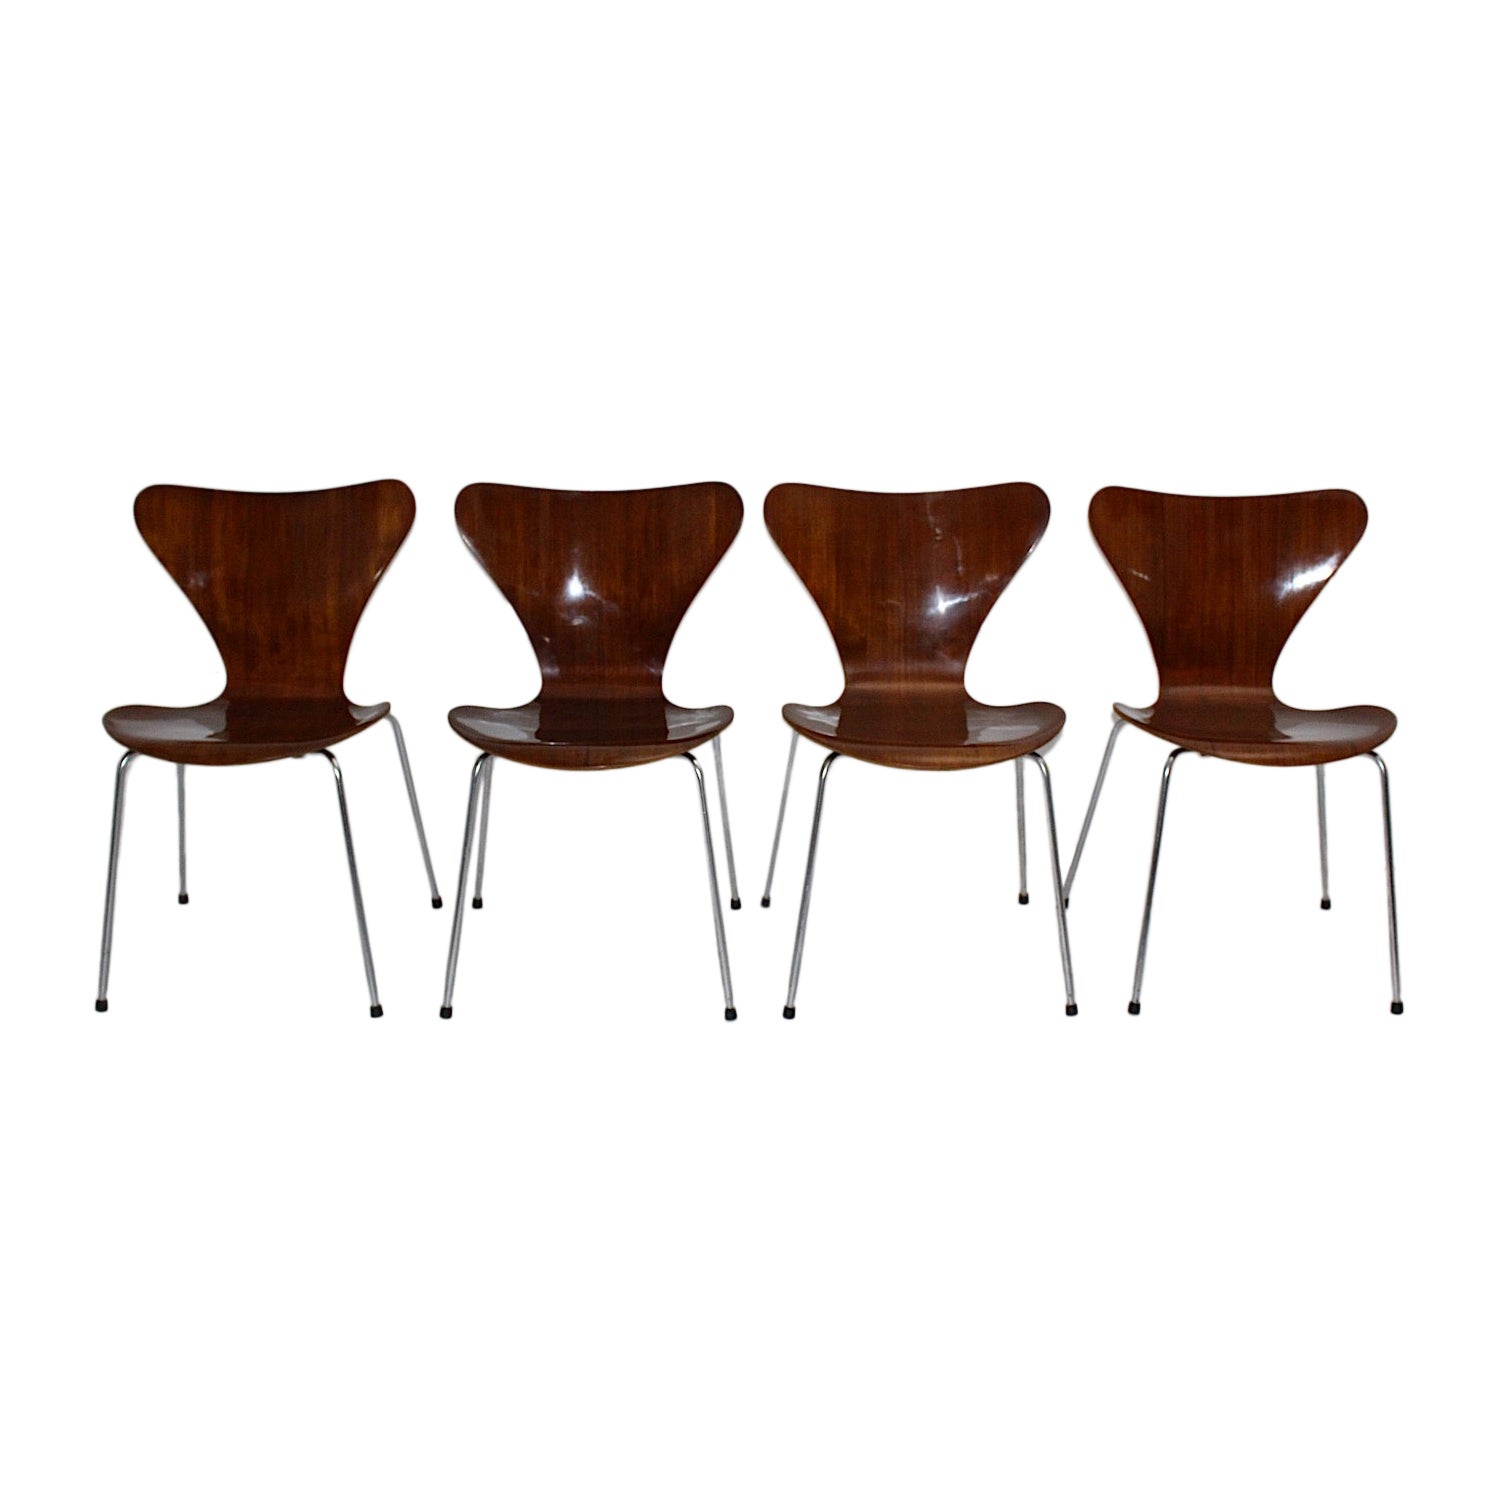 Modernist Vintage Brown Four Dining Chairs Arne Jacobsen 3107 circa 1955 Denmark For Sale